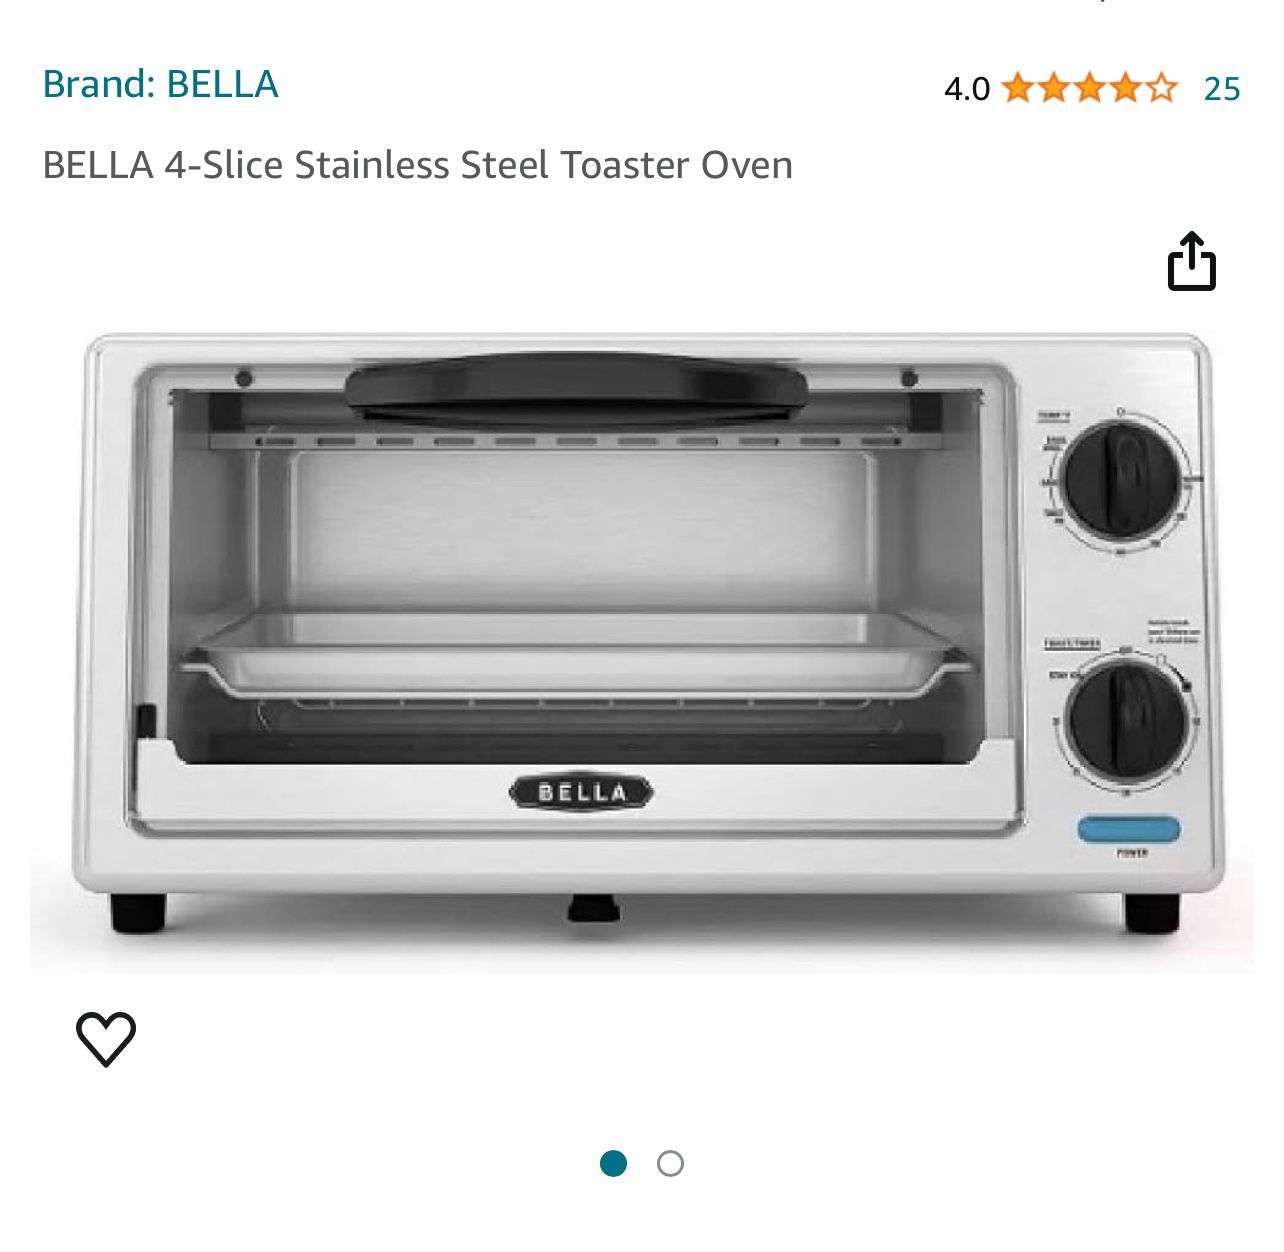 BELLA 4-Slice Stainless Steel Toaster Oven